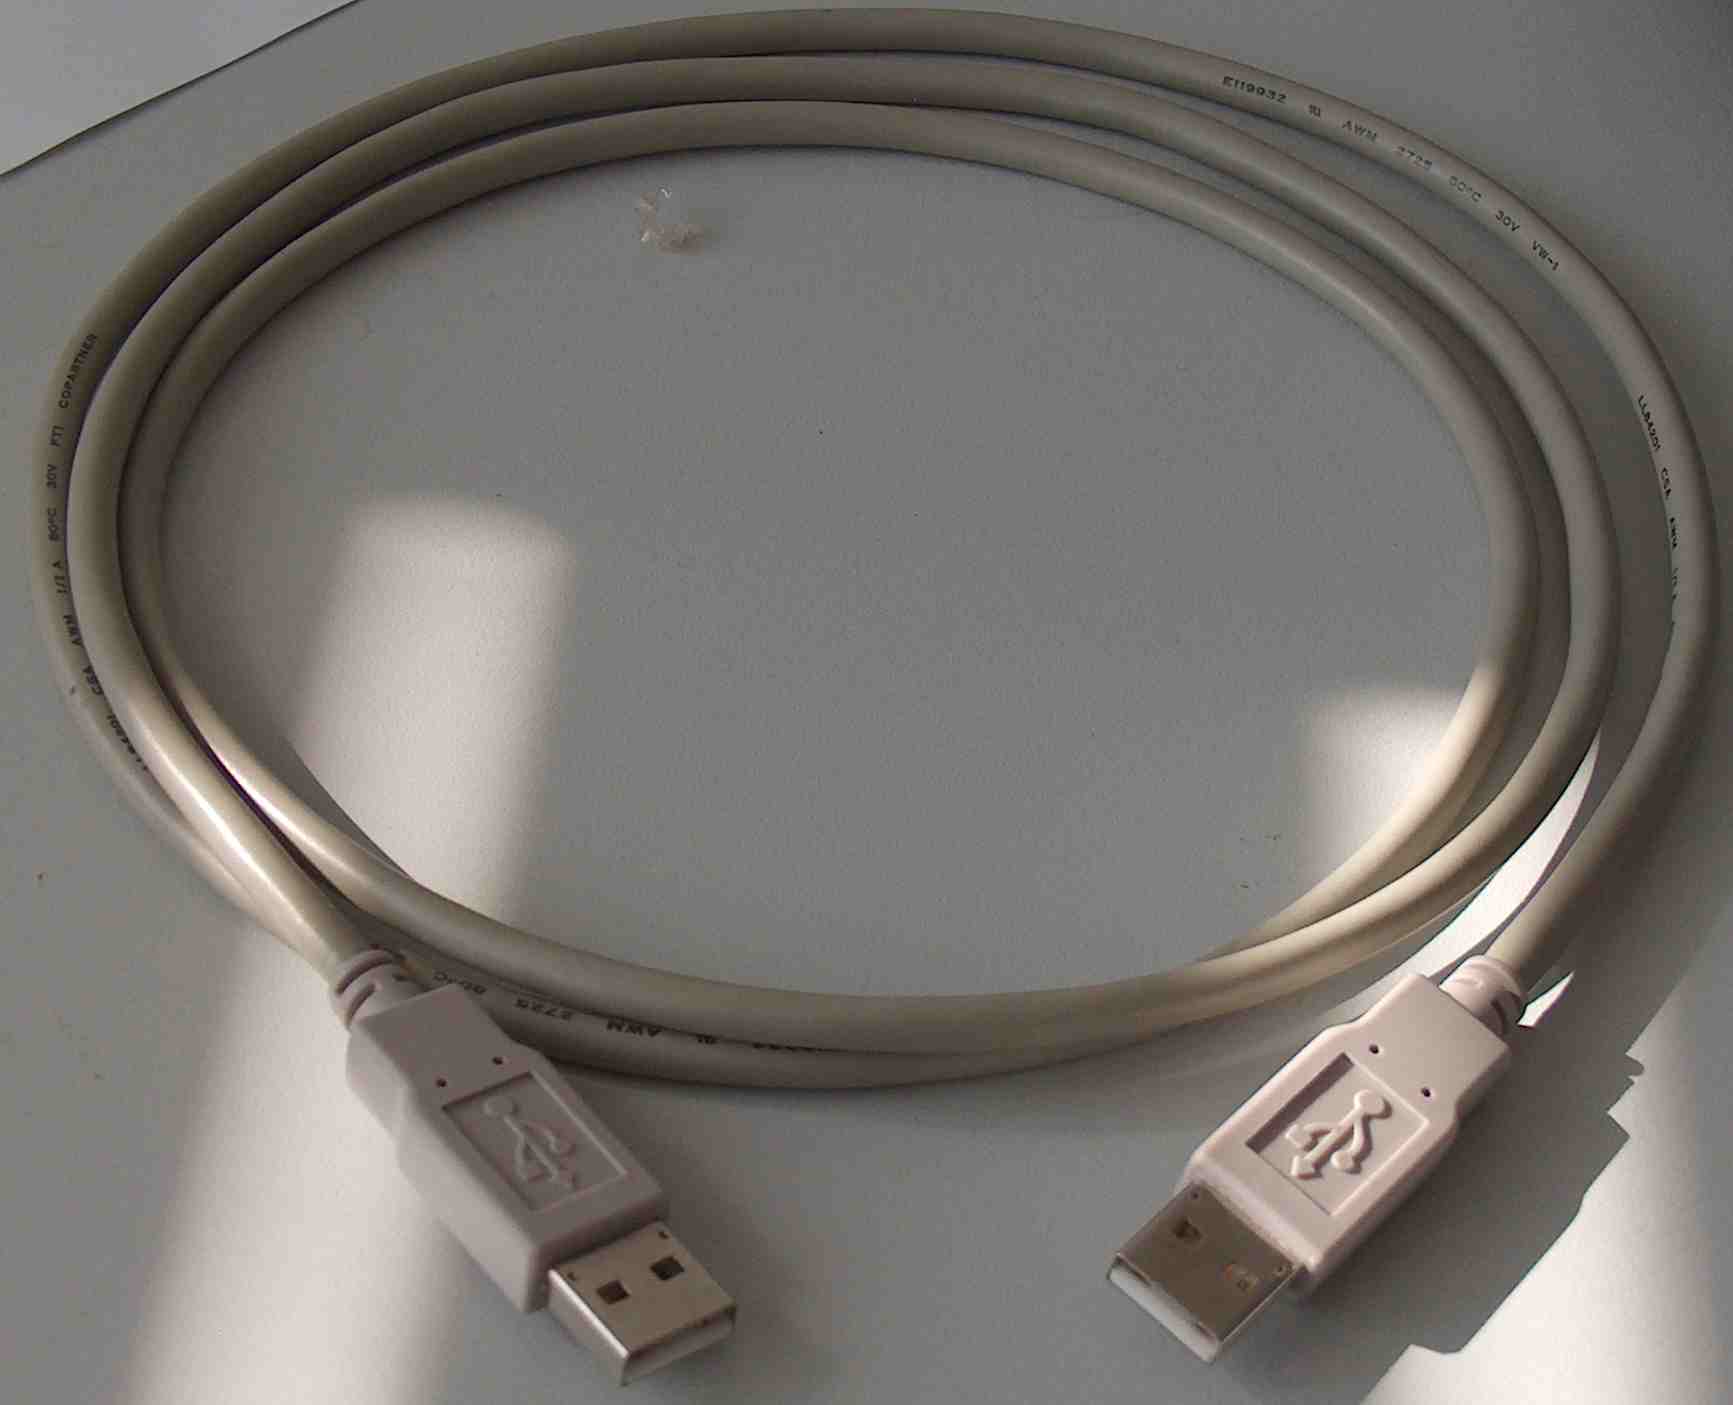 USB Kabel selbst anfertigen "Crossover" - Mikrocontroller.net